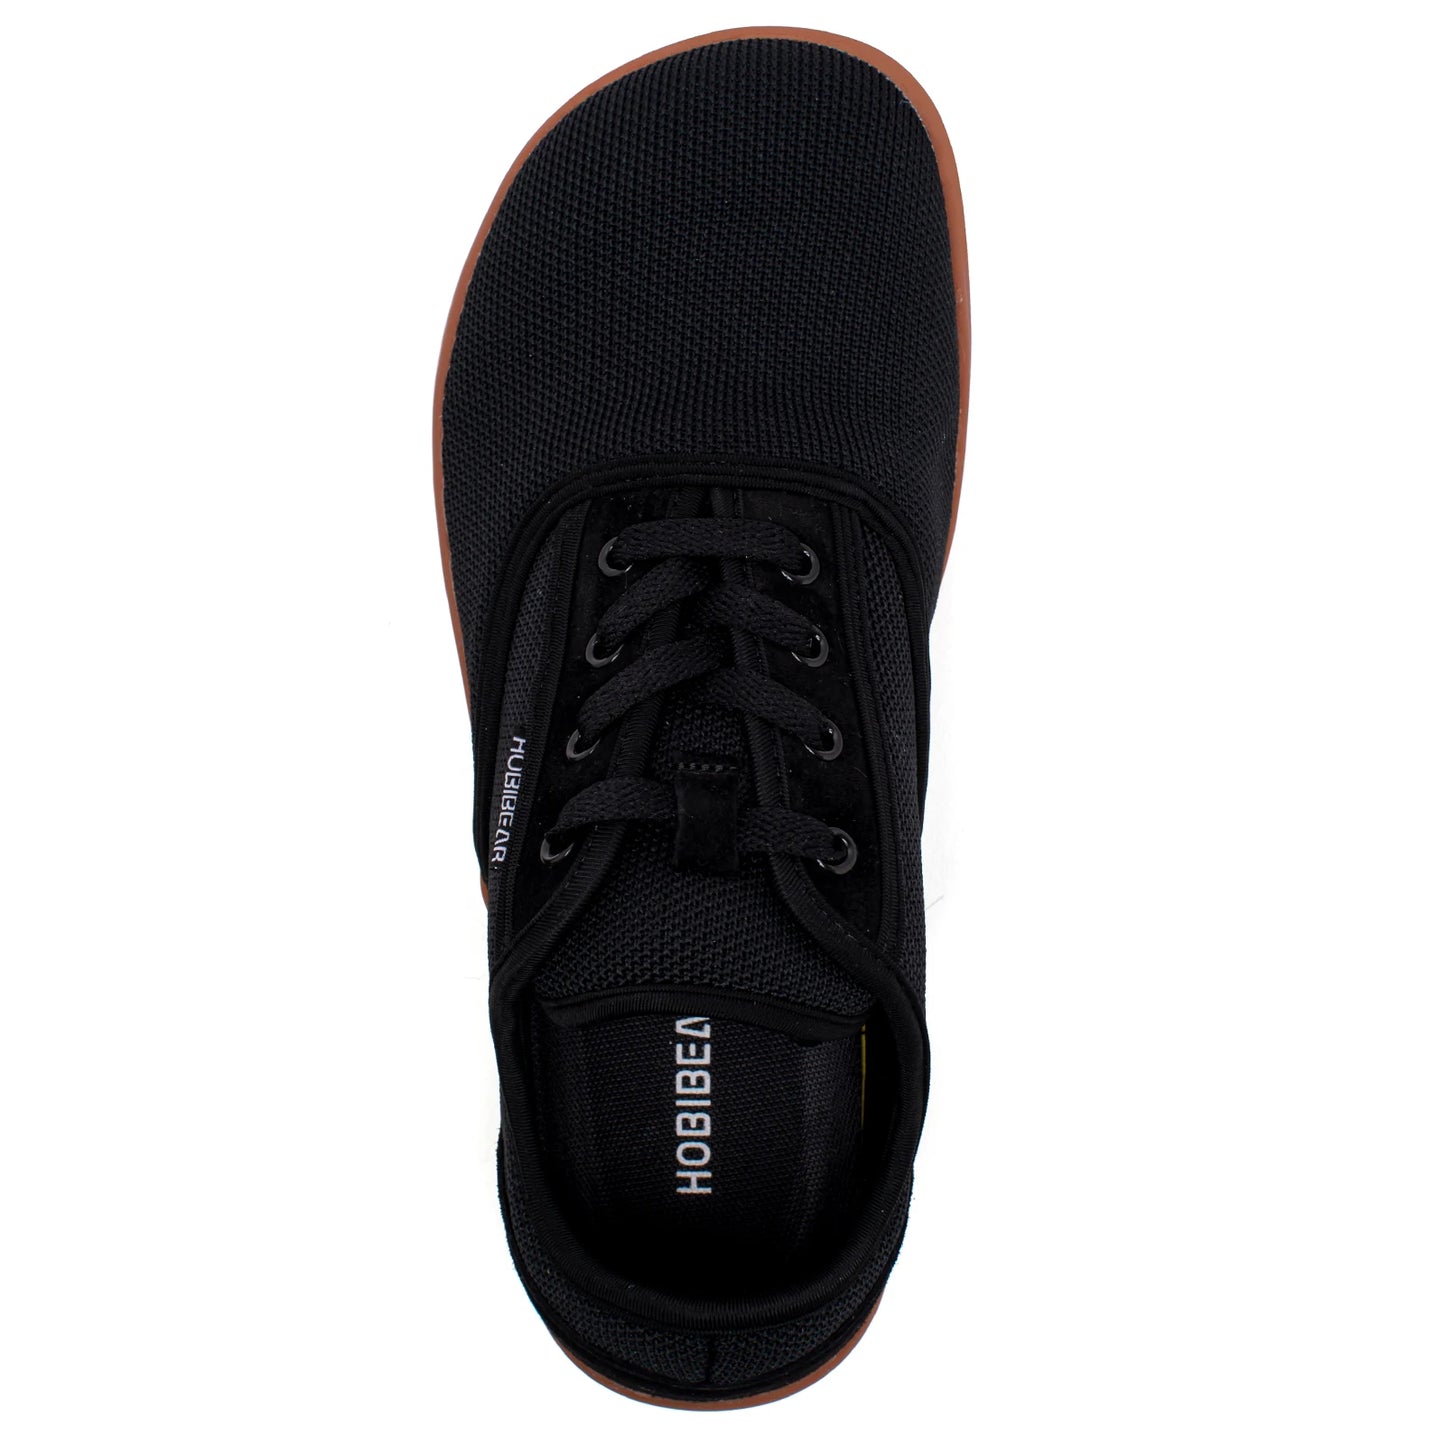 HOBIBEAR Men's Wide-Toe Barefoot Shoes